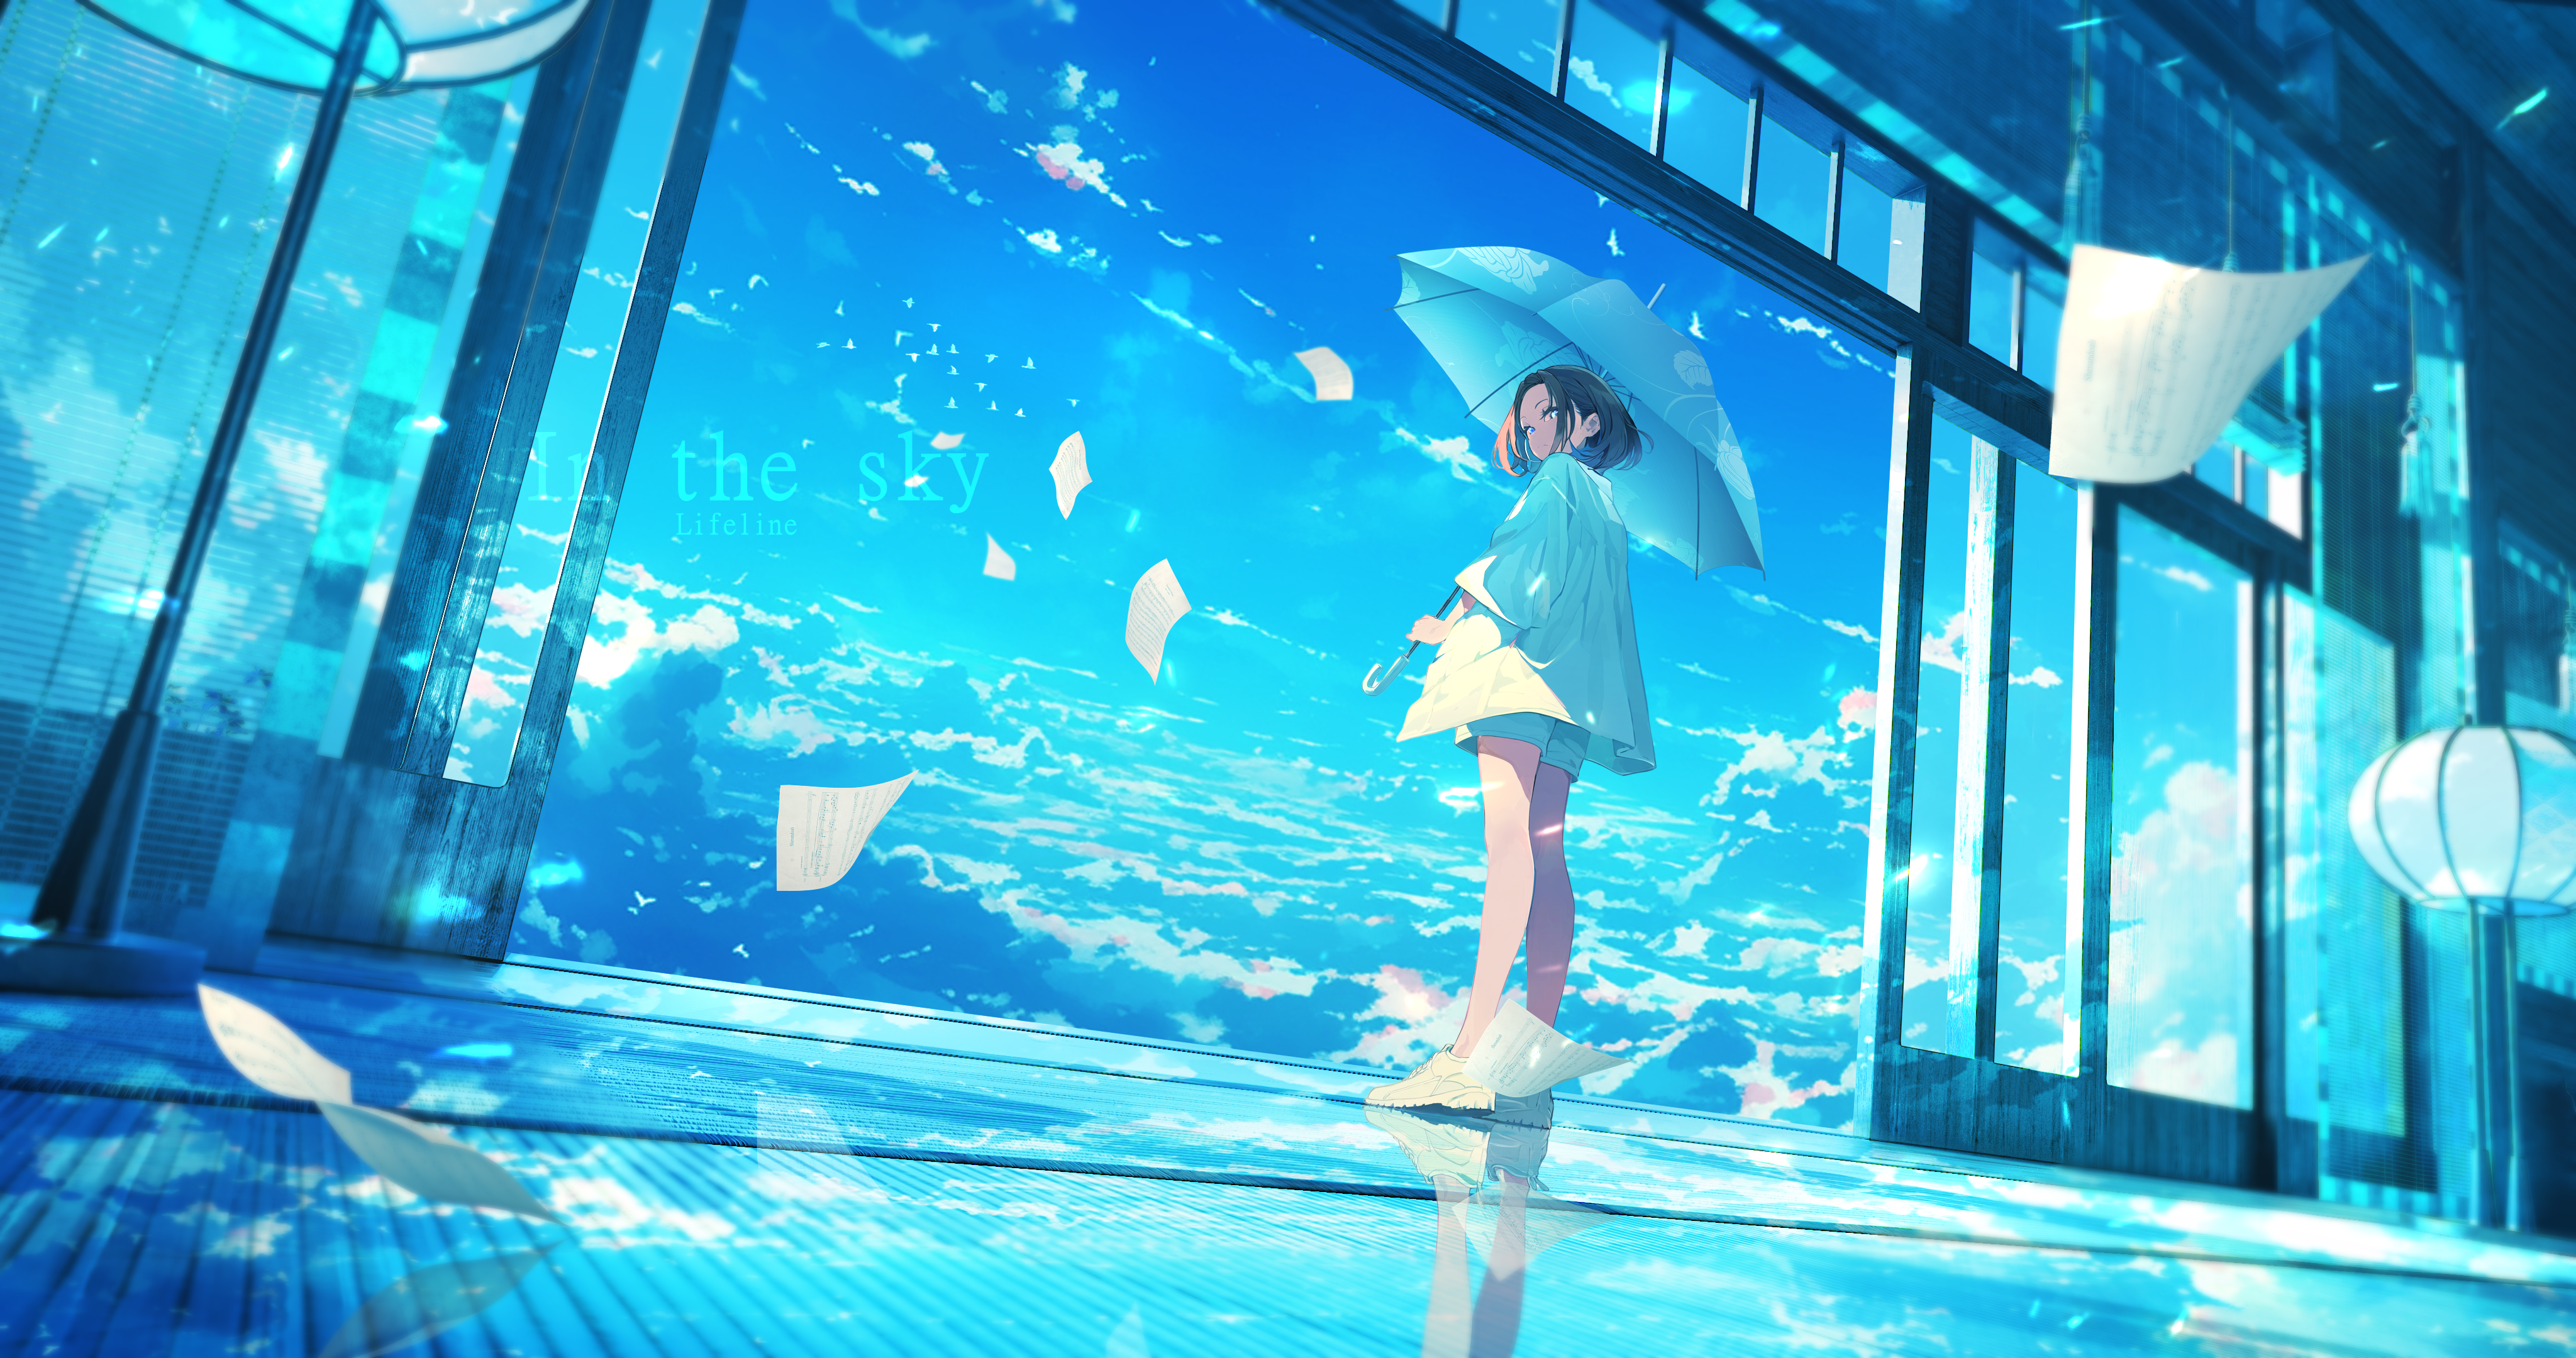 Anime Girls Blue Sky Clouds Umbrella Digital Art Lifeline Notes 4096x2160